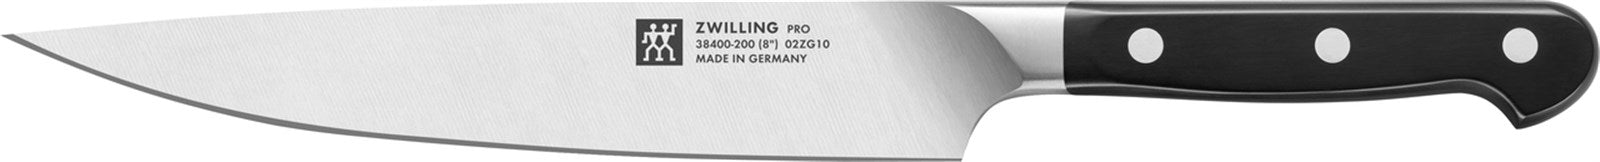 Zwilling Pro Messerset, 2-tlg. (Fleischmesser & - gabel) - KAQTU Design